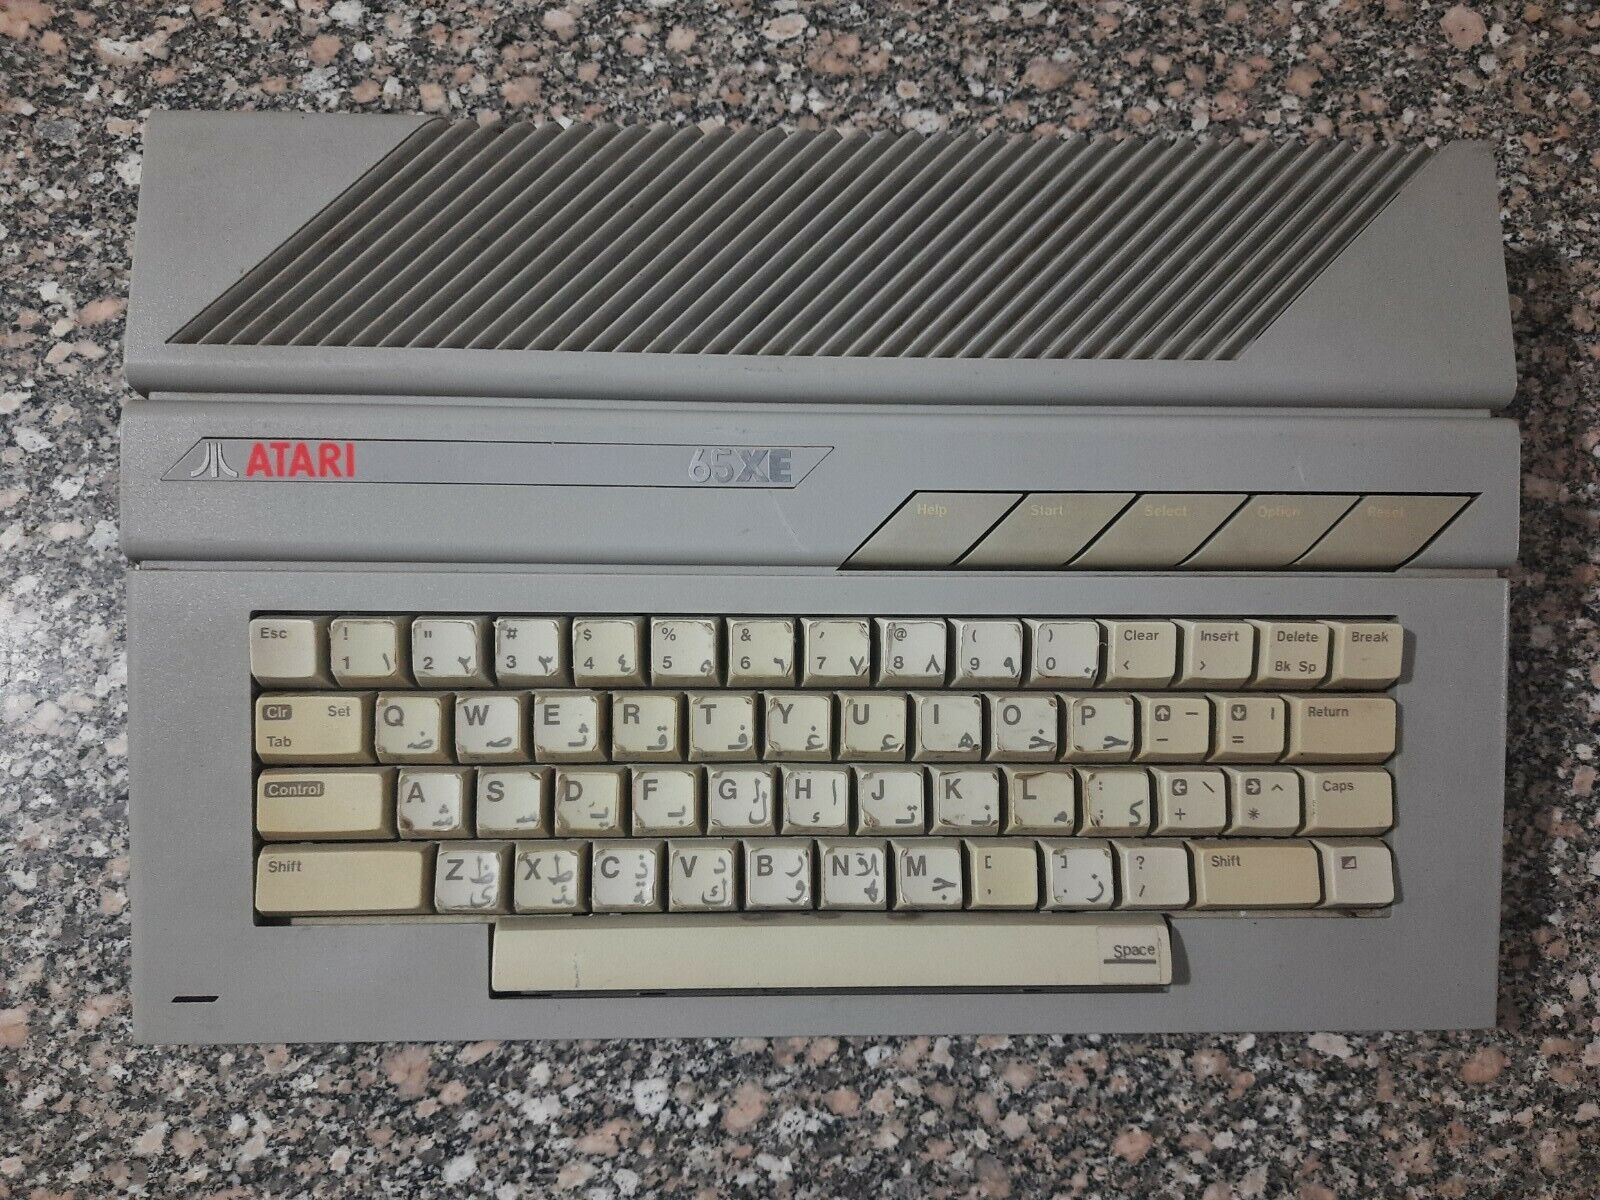 Atari 65XE - Home Computer very Rare (PAL) Vintage Game